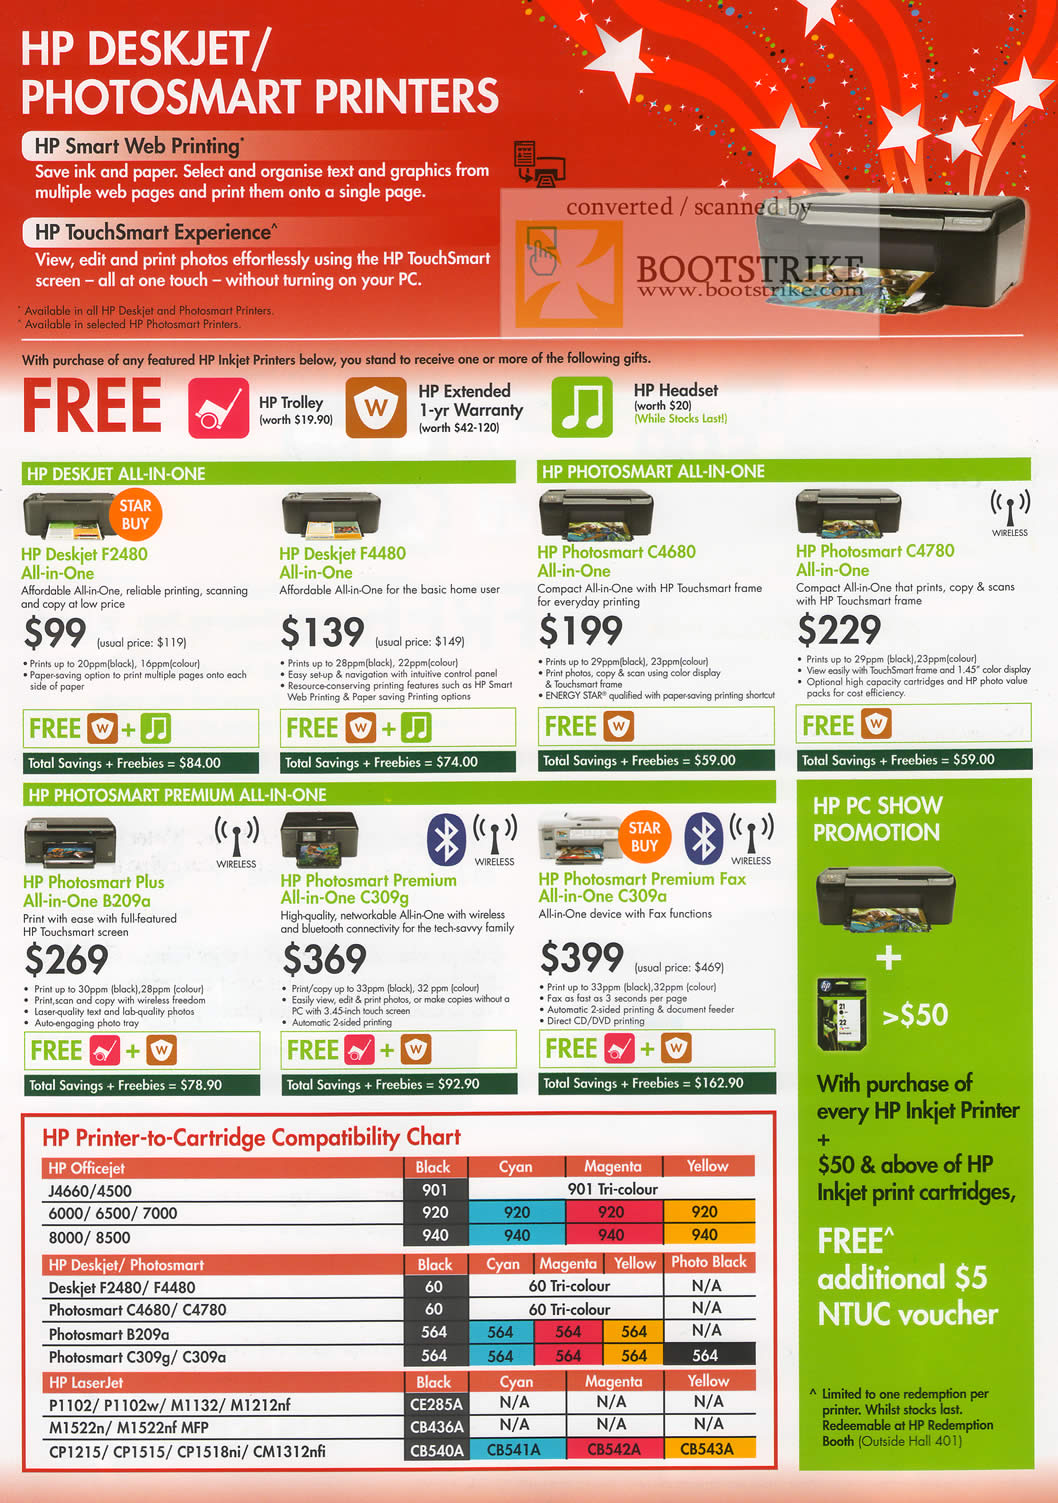 PC Show 2010 price list image brochure of HP Printers Deskjet Photosmart AIO F2480 F4480 C4680 C4780 Premium B209a C309a